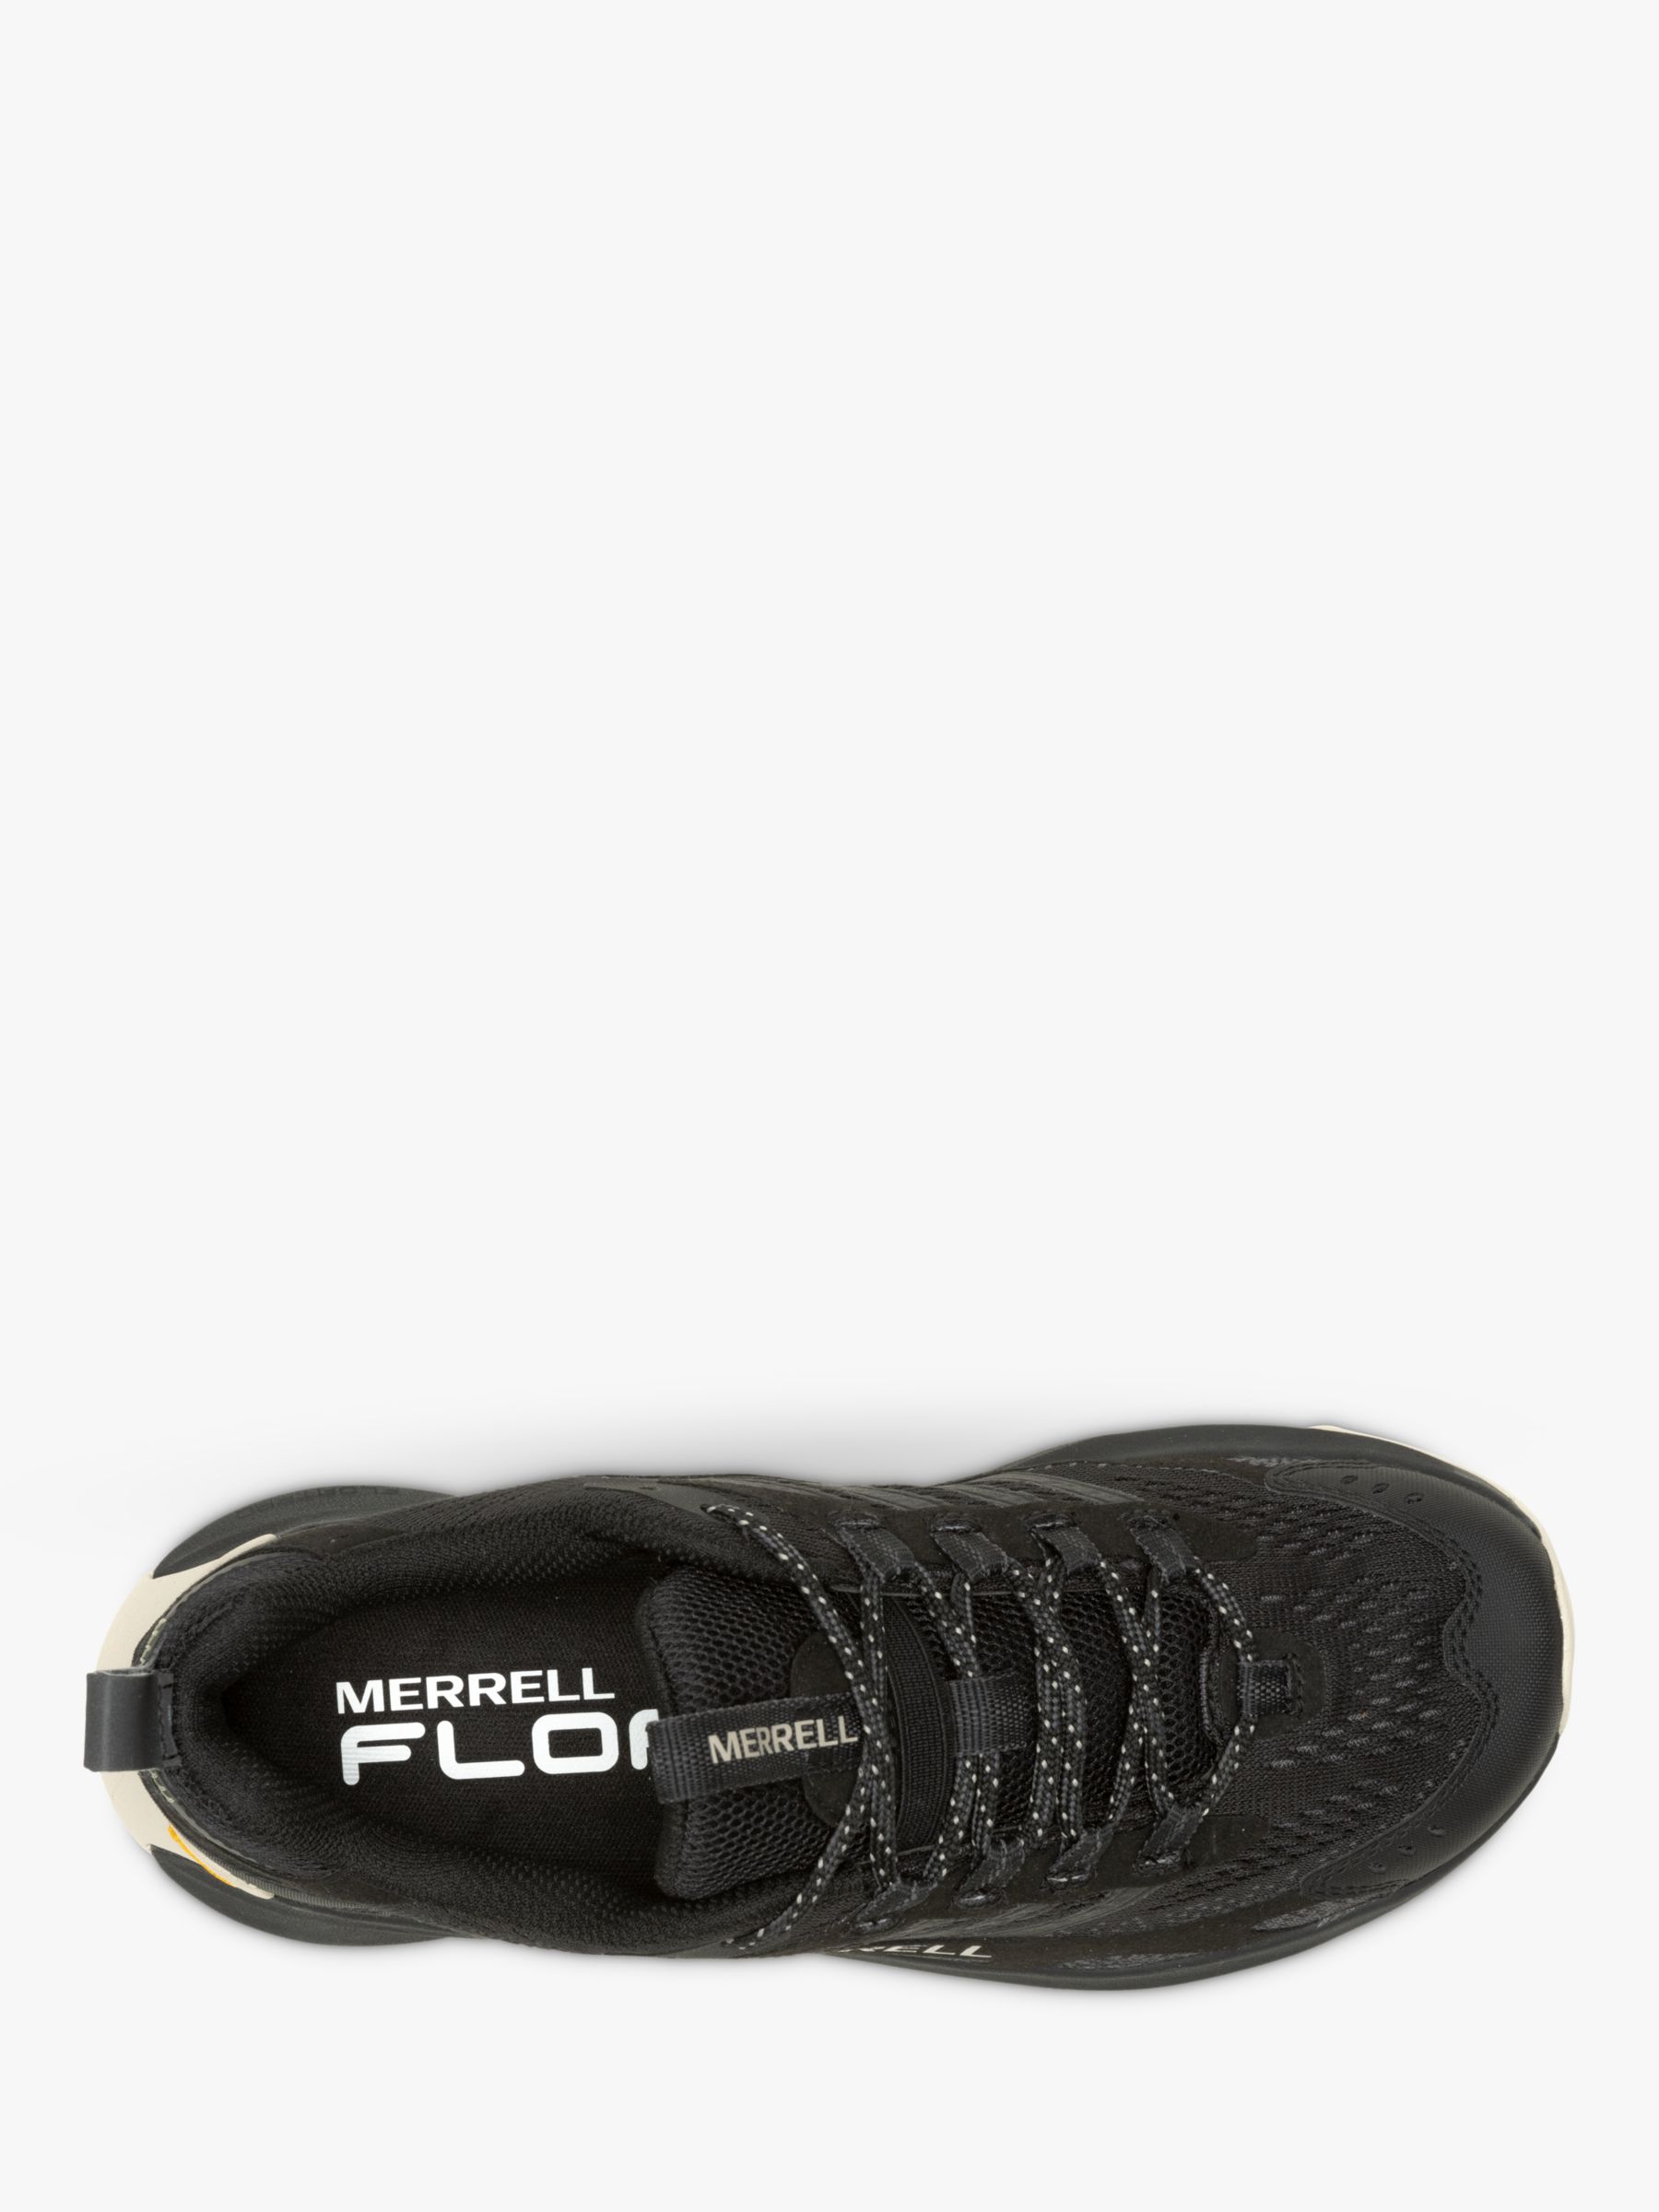 Merrell Moab Speedy 2 Women's Sports Shoes, Black, 5